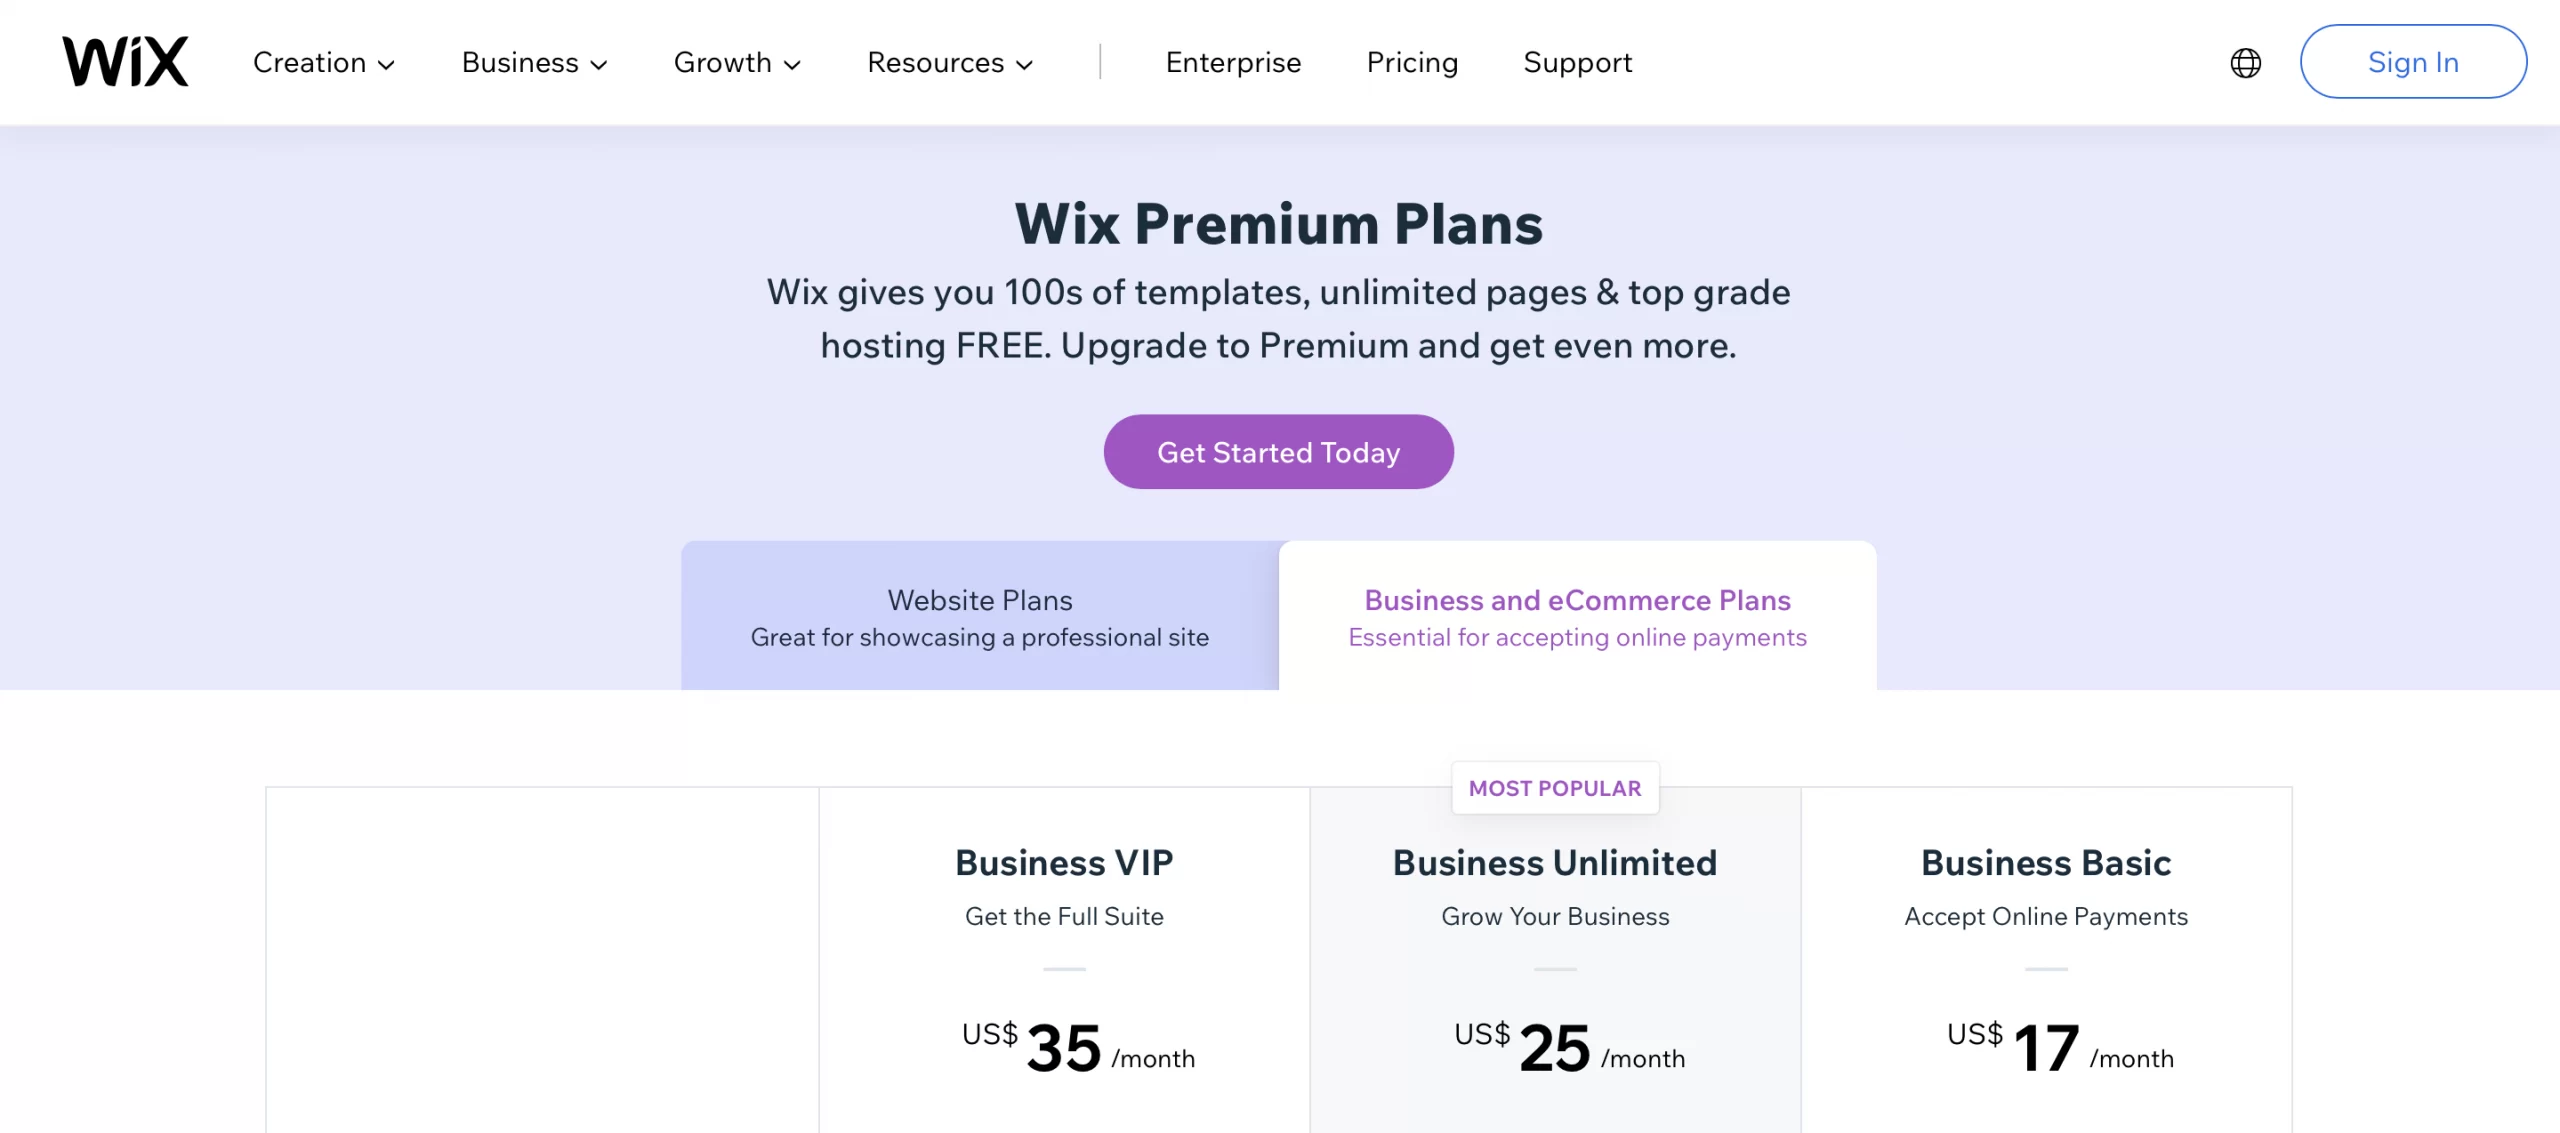 Wix pricing 2